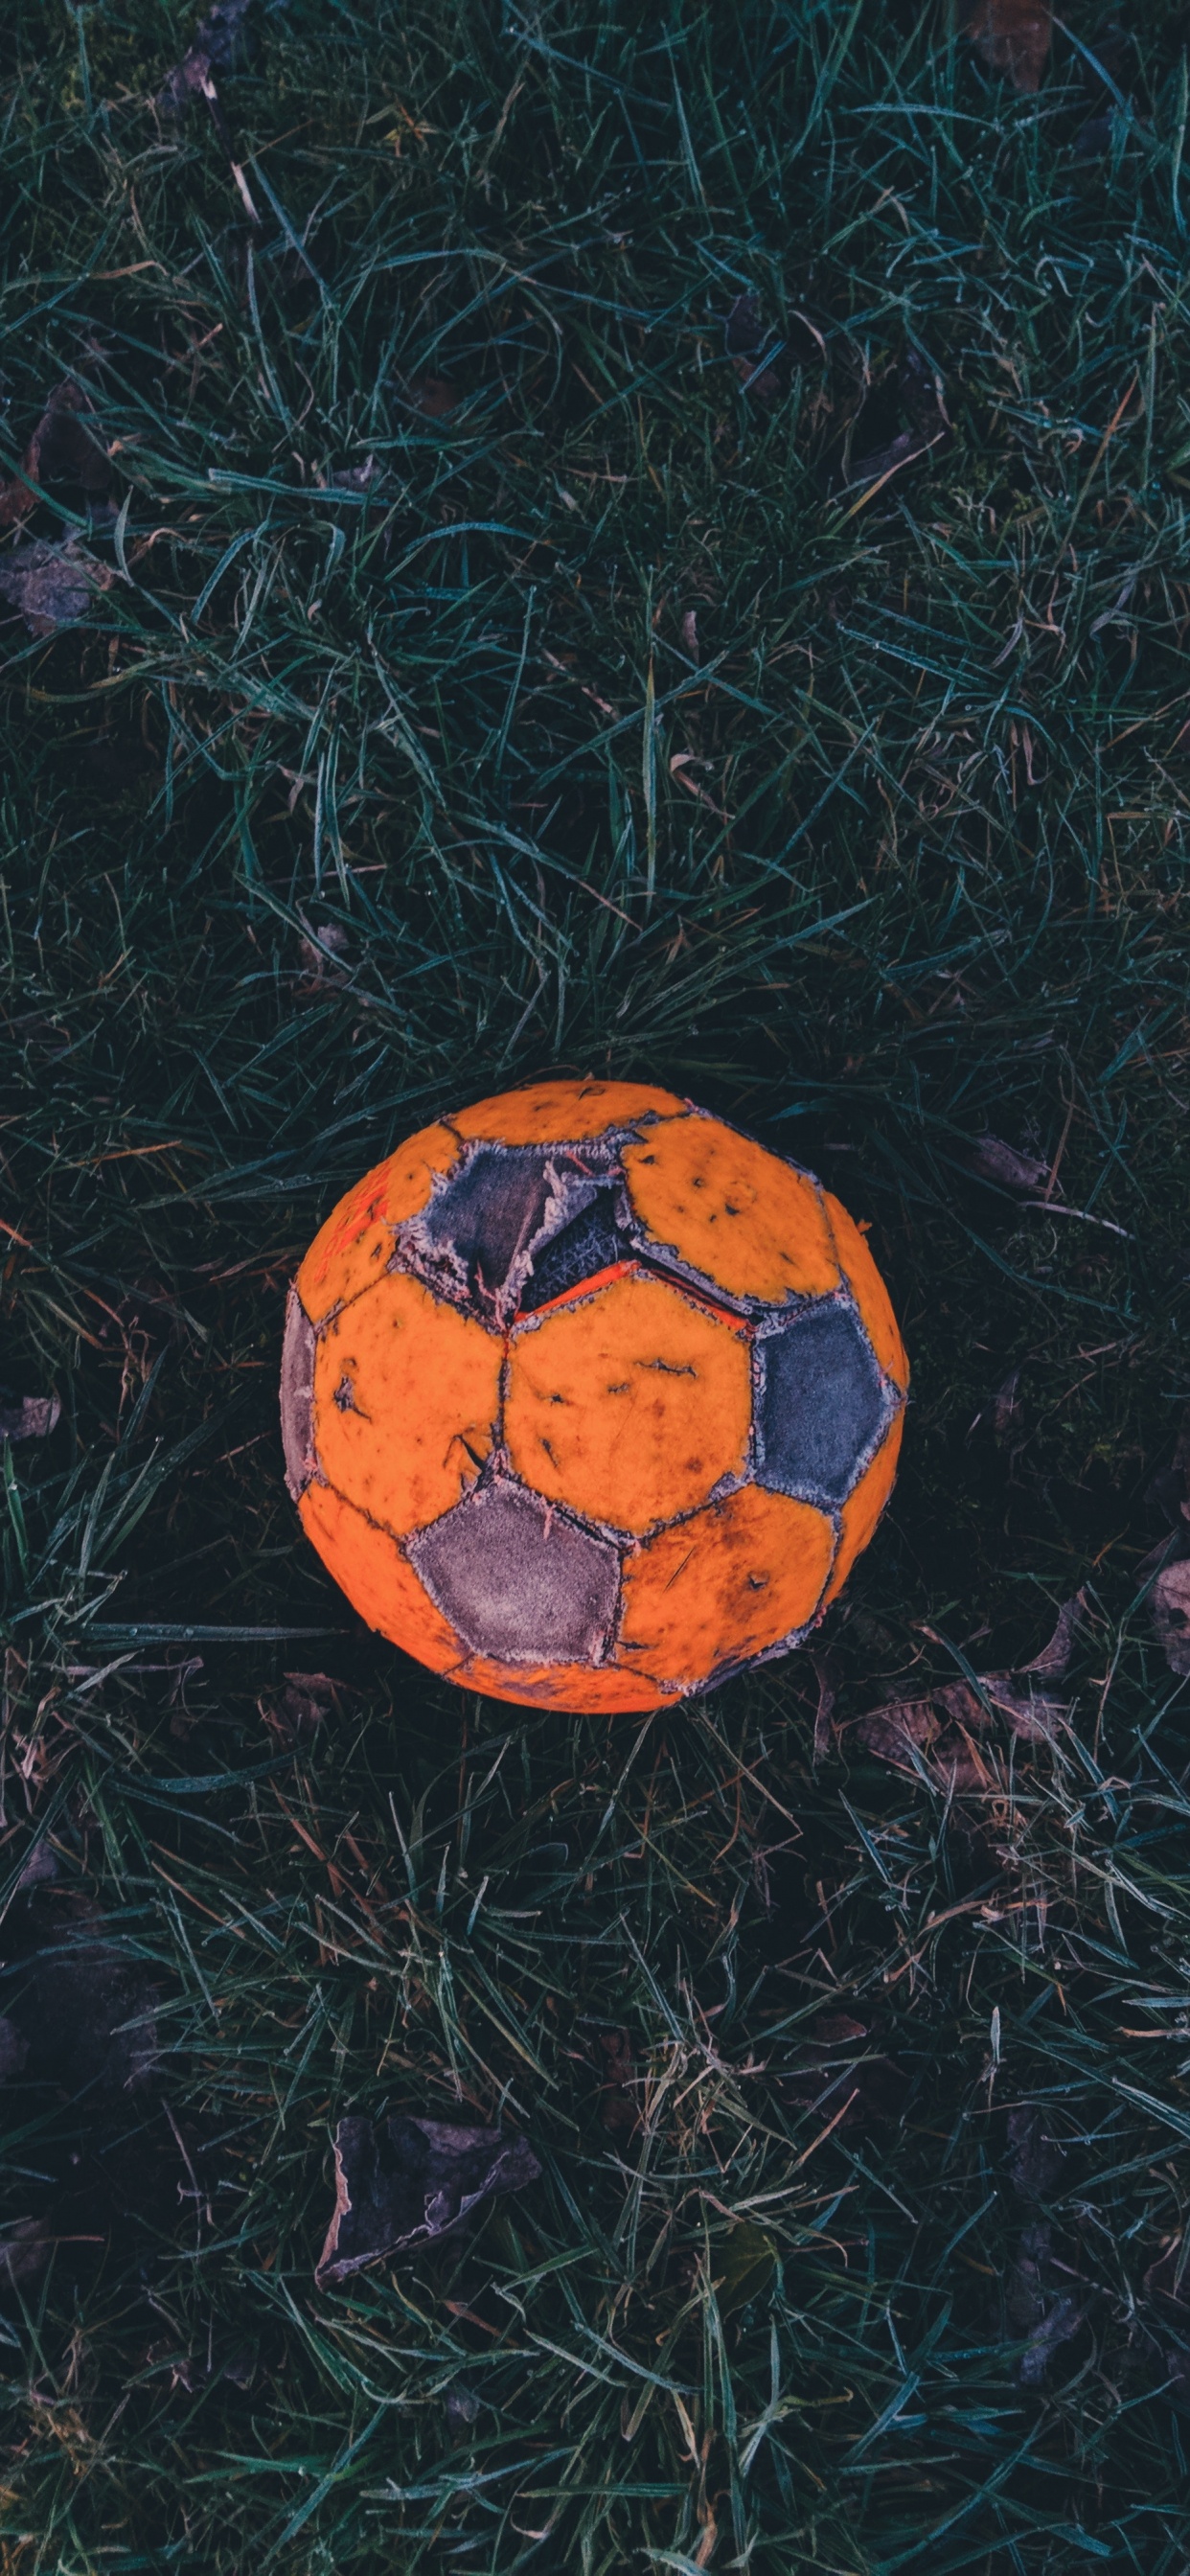 Ballon de Football Orange et Noir Sur L'herbe Verte. Wallpaper in 1242x2688 Resolution